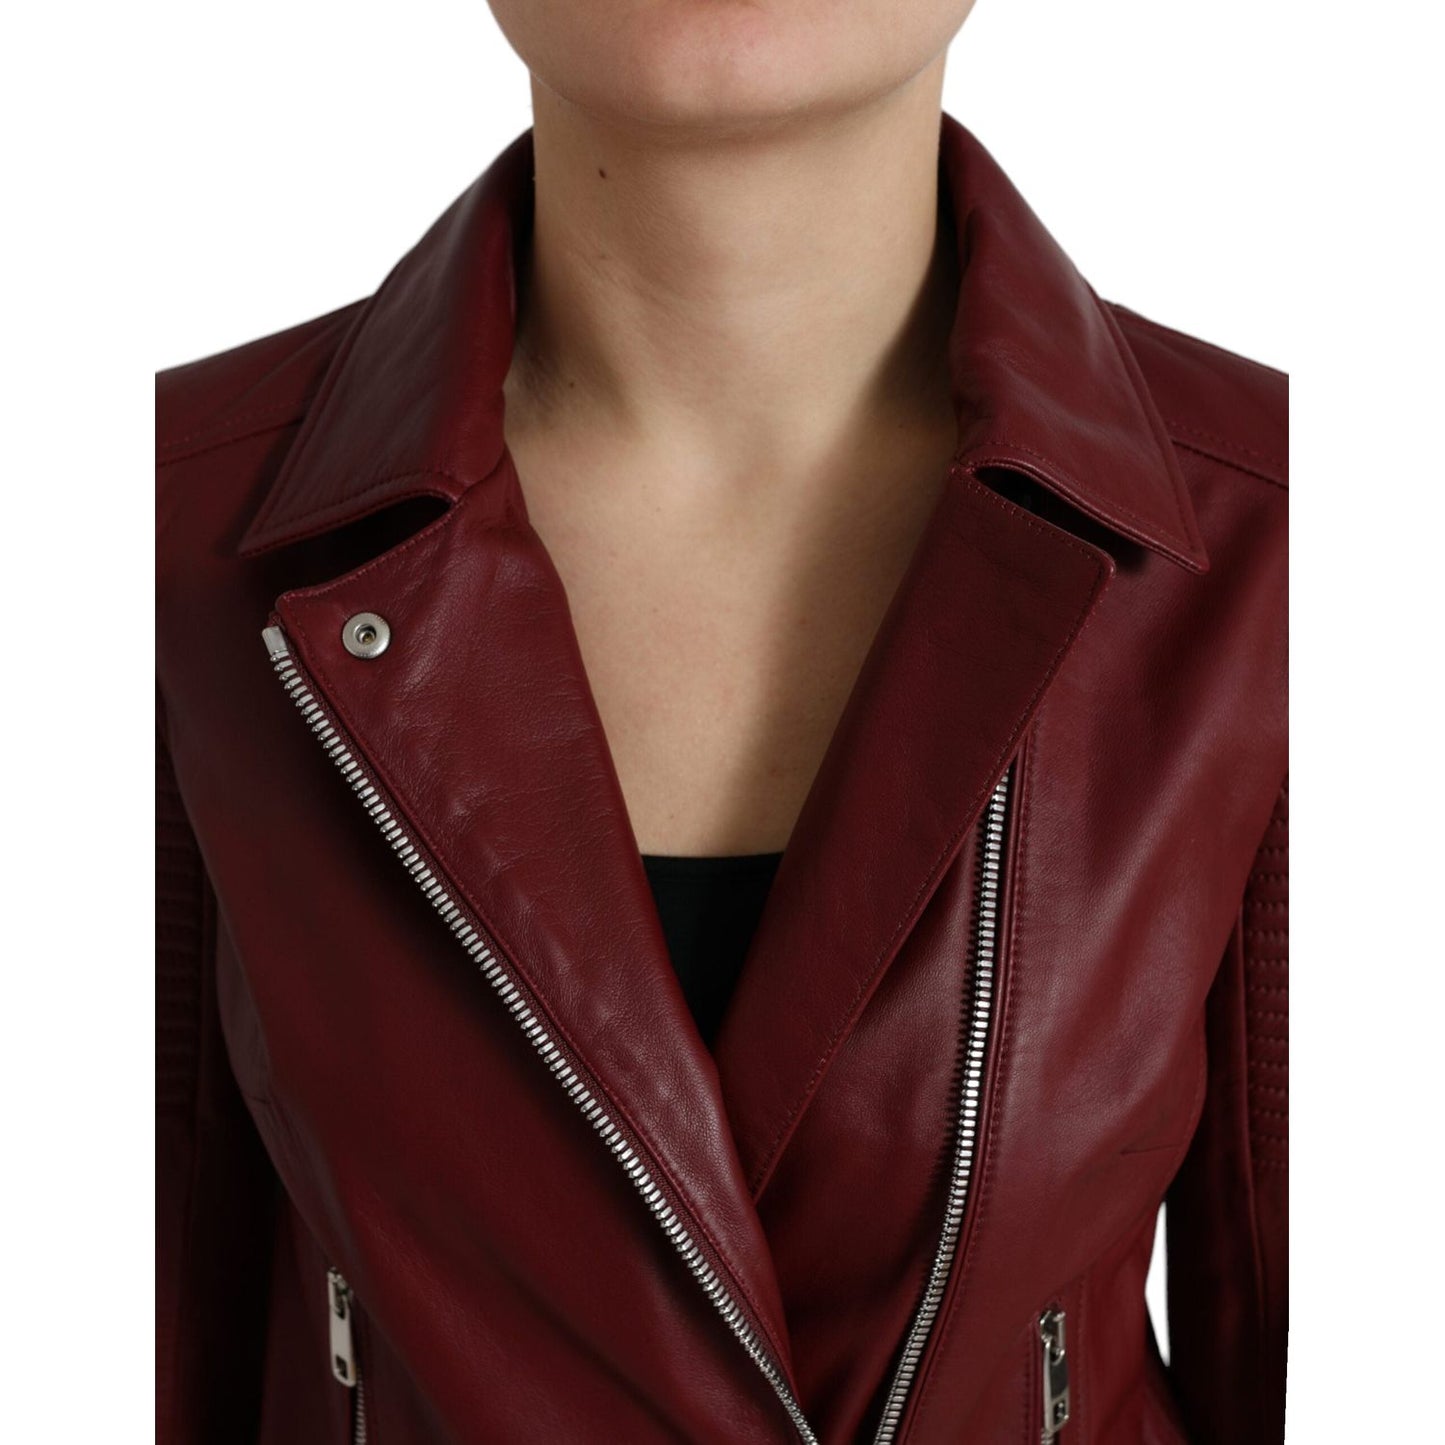 Dolce & Gabbana Bordeaux Biker Leather Jacket bordeaux-leather-biker-coat-lambskin-jacket 465A9336-BG-scaled-3fa36f72-e12.jpg